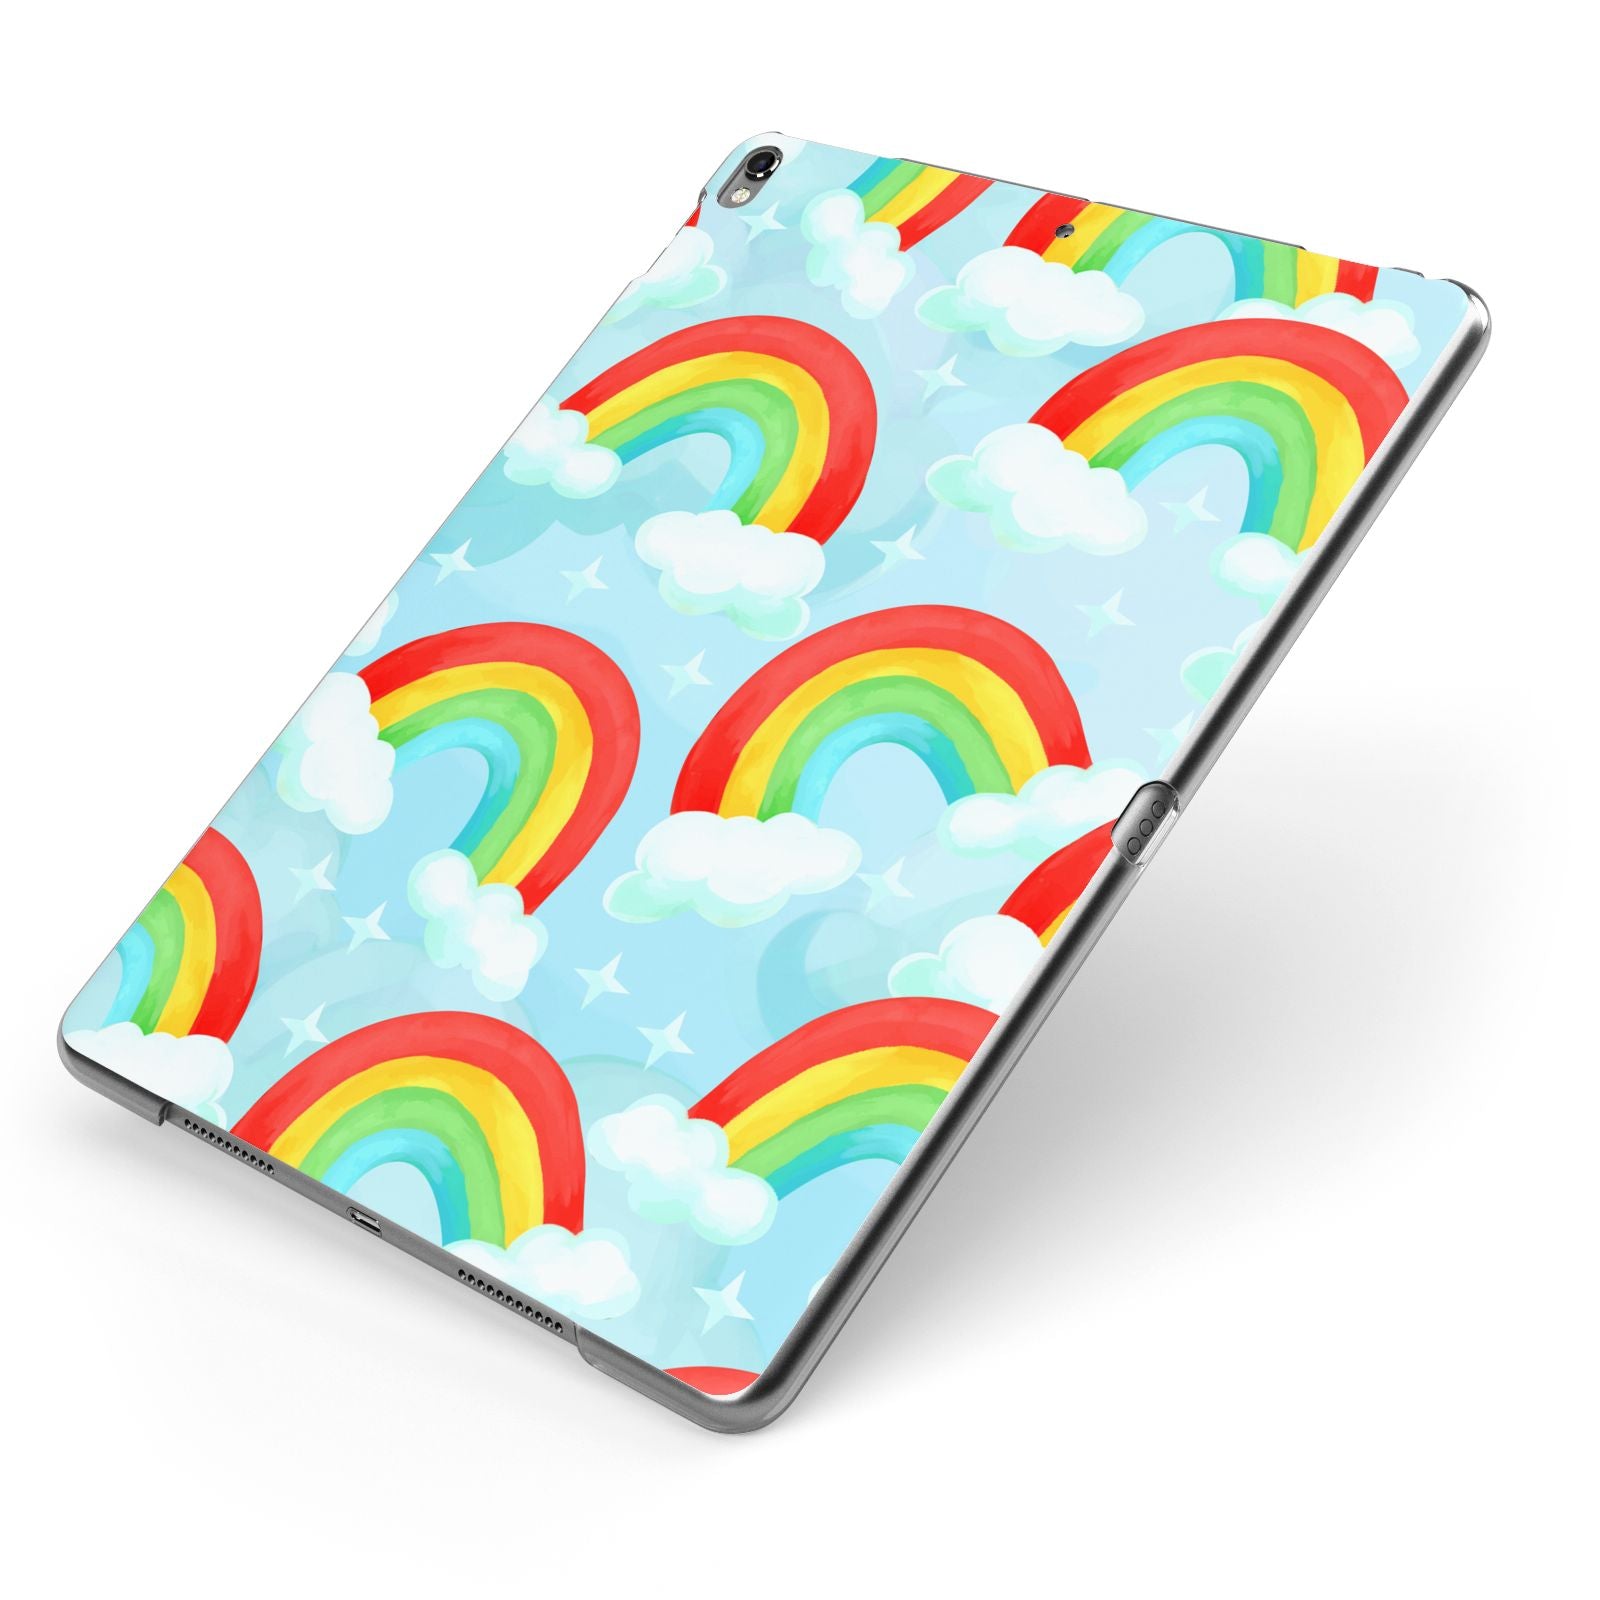 Rainbow Sky Apple iPad Case on Grey iPad Side View